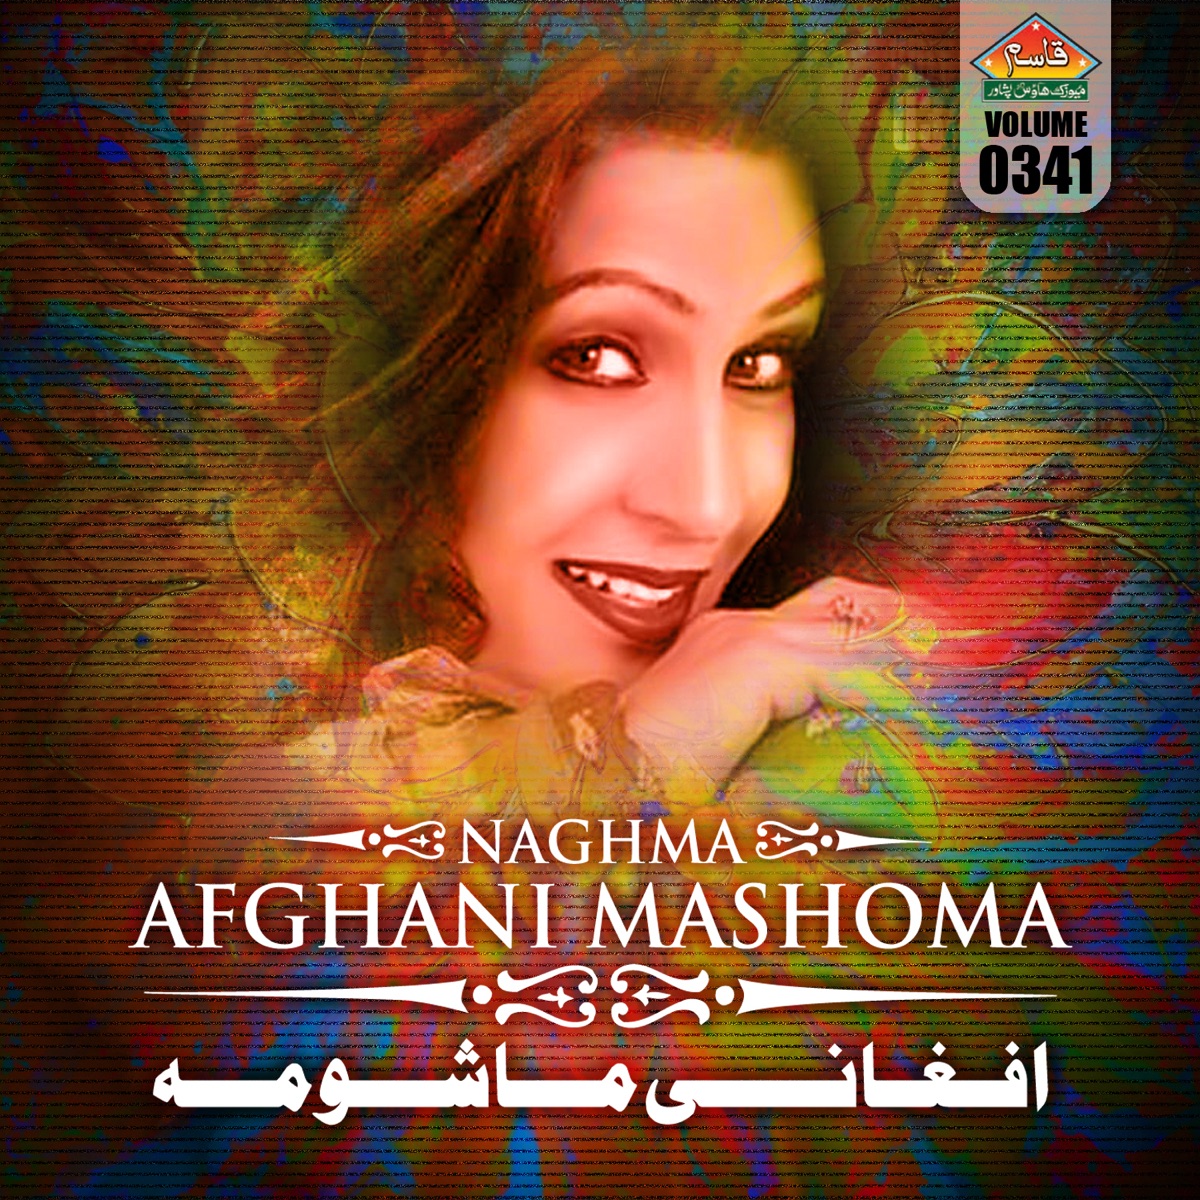 Afghani Mashoma, Vol. 341 by Naghma on Apple Music